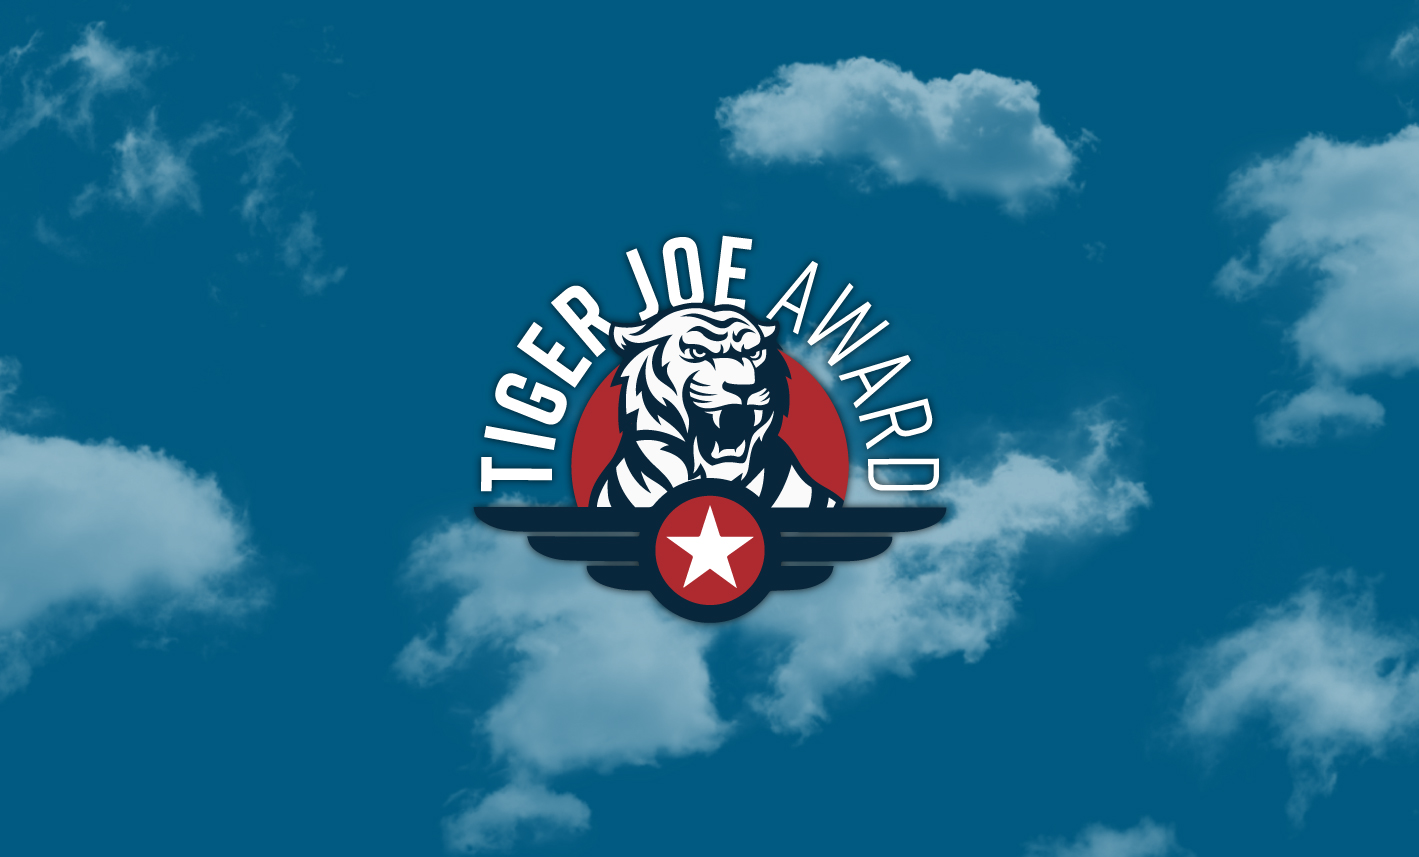 Tiger Joe Award logo in front of cloudy sky